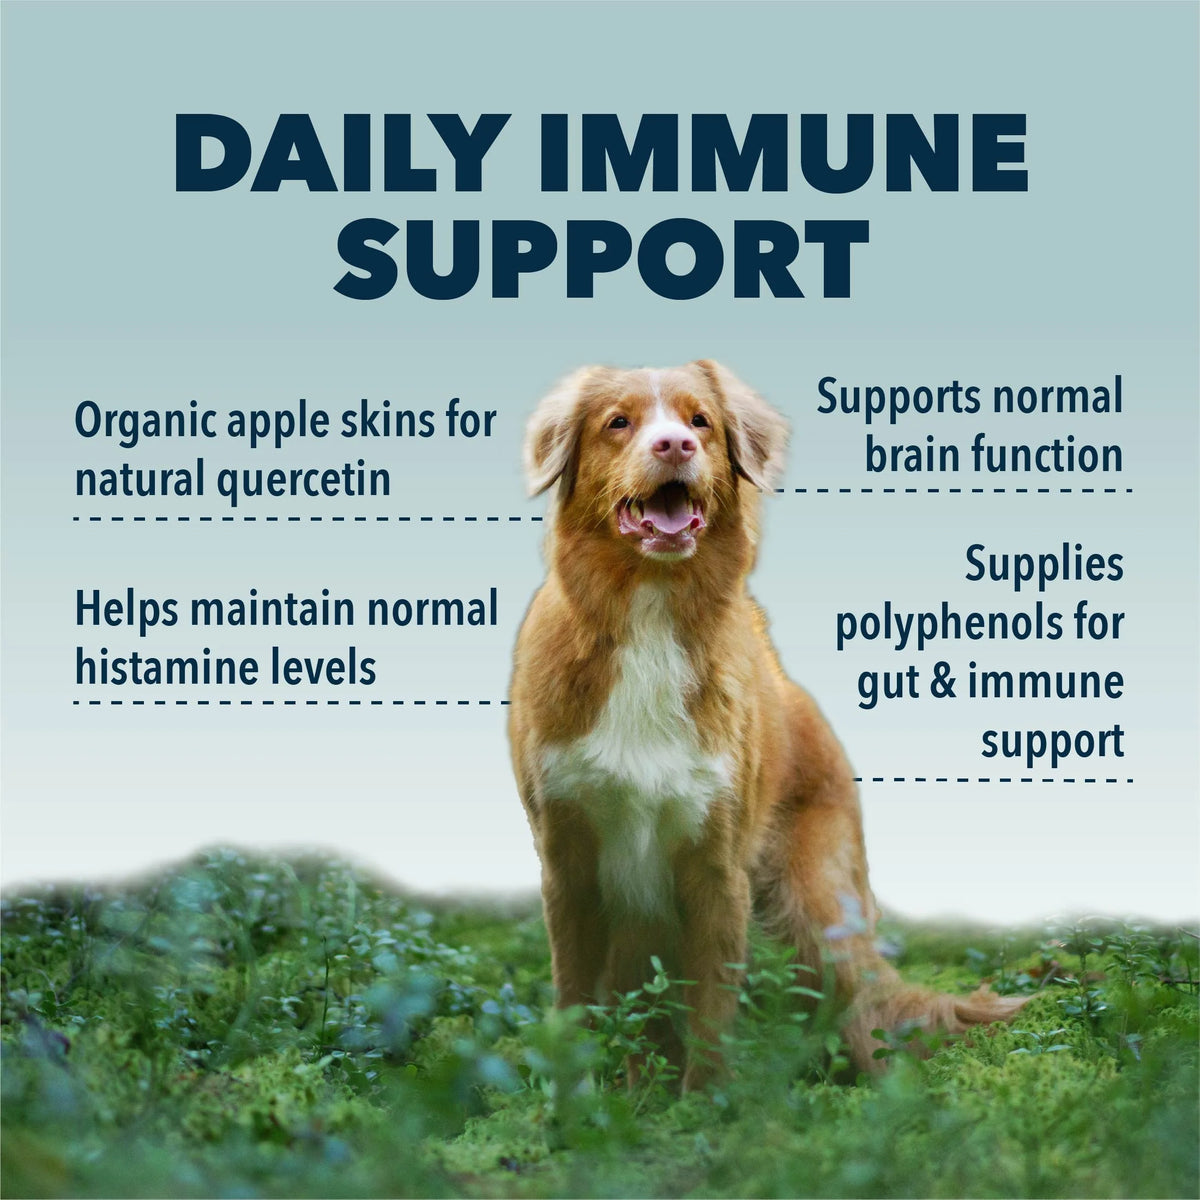 4LR BUNDLE: Allergy Support for Dogs